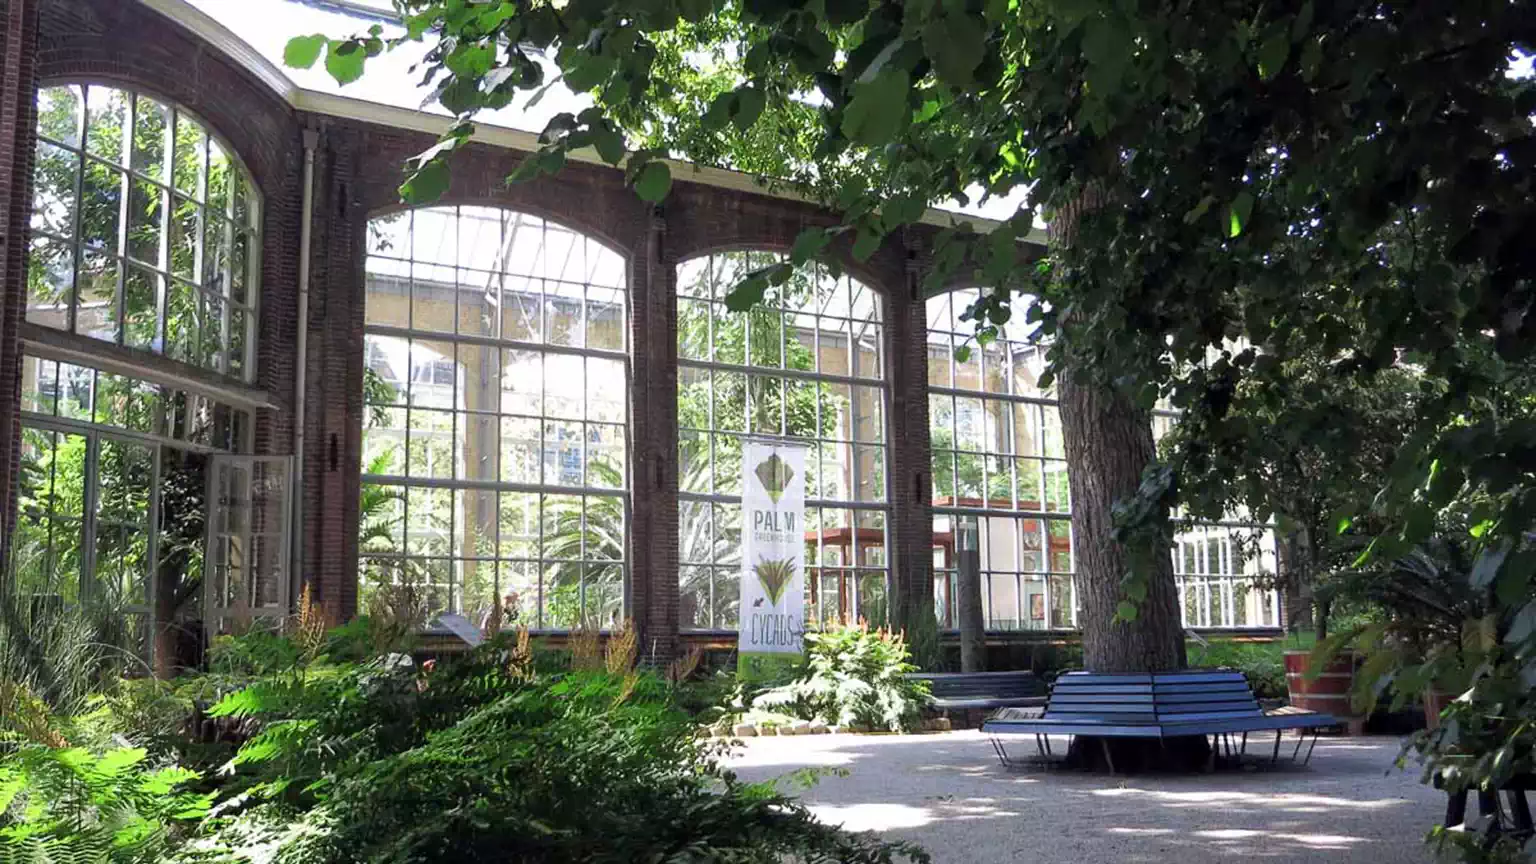 Pavillion of the Hortus Botanicus, Amsterdam